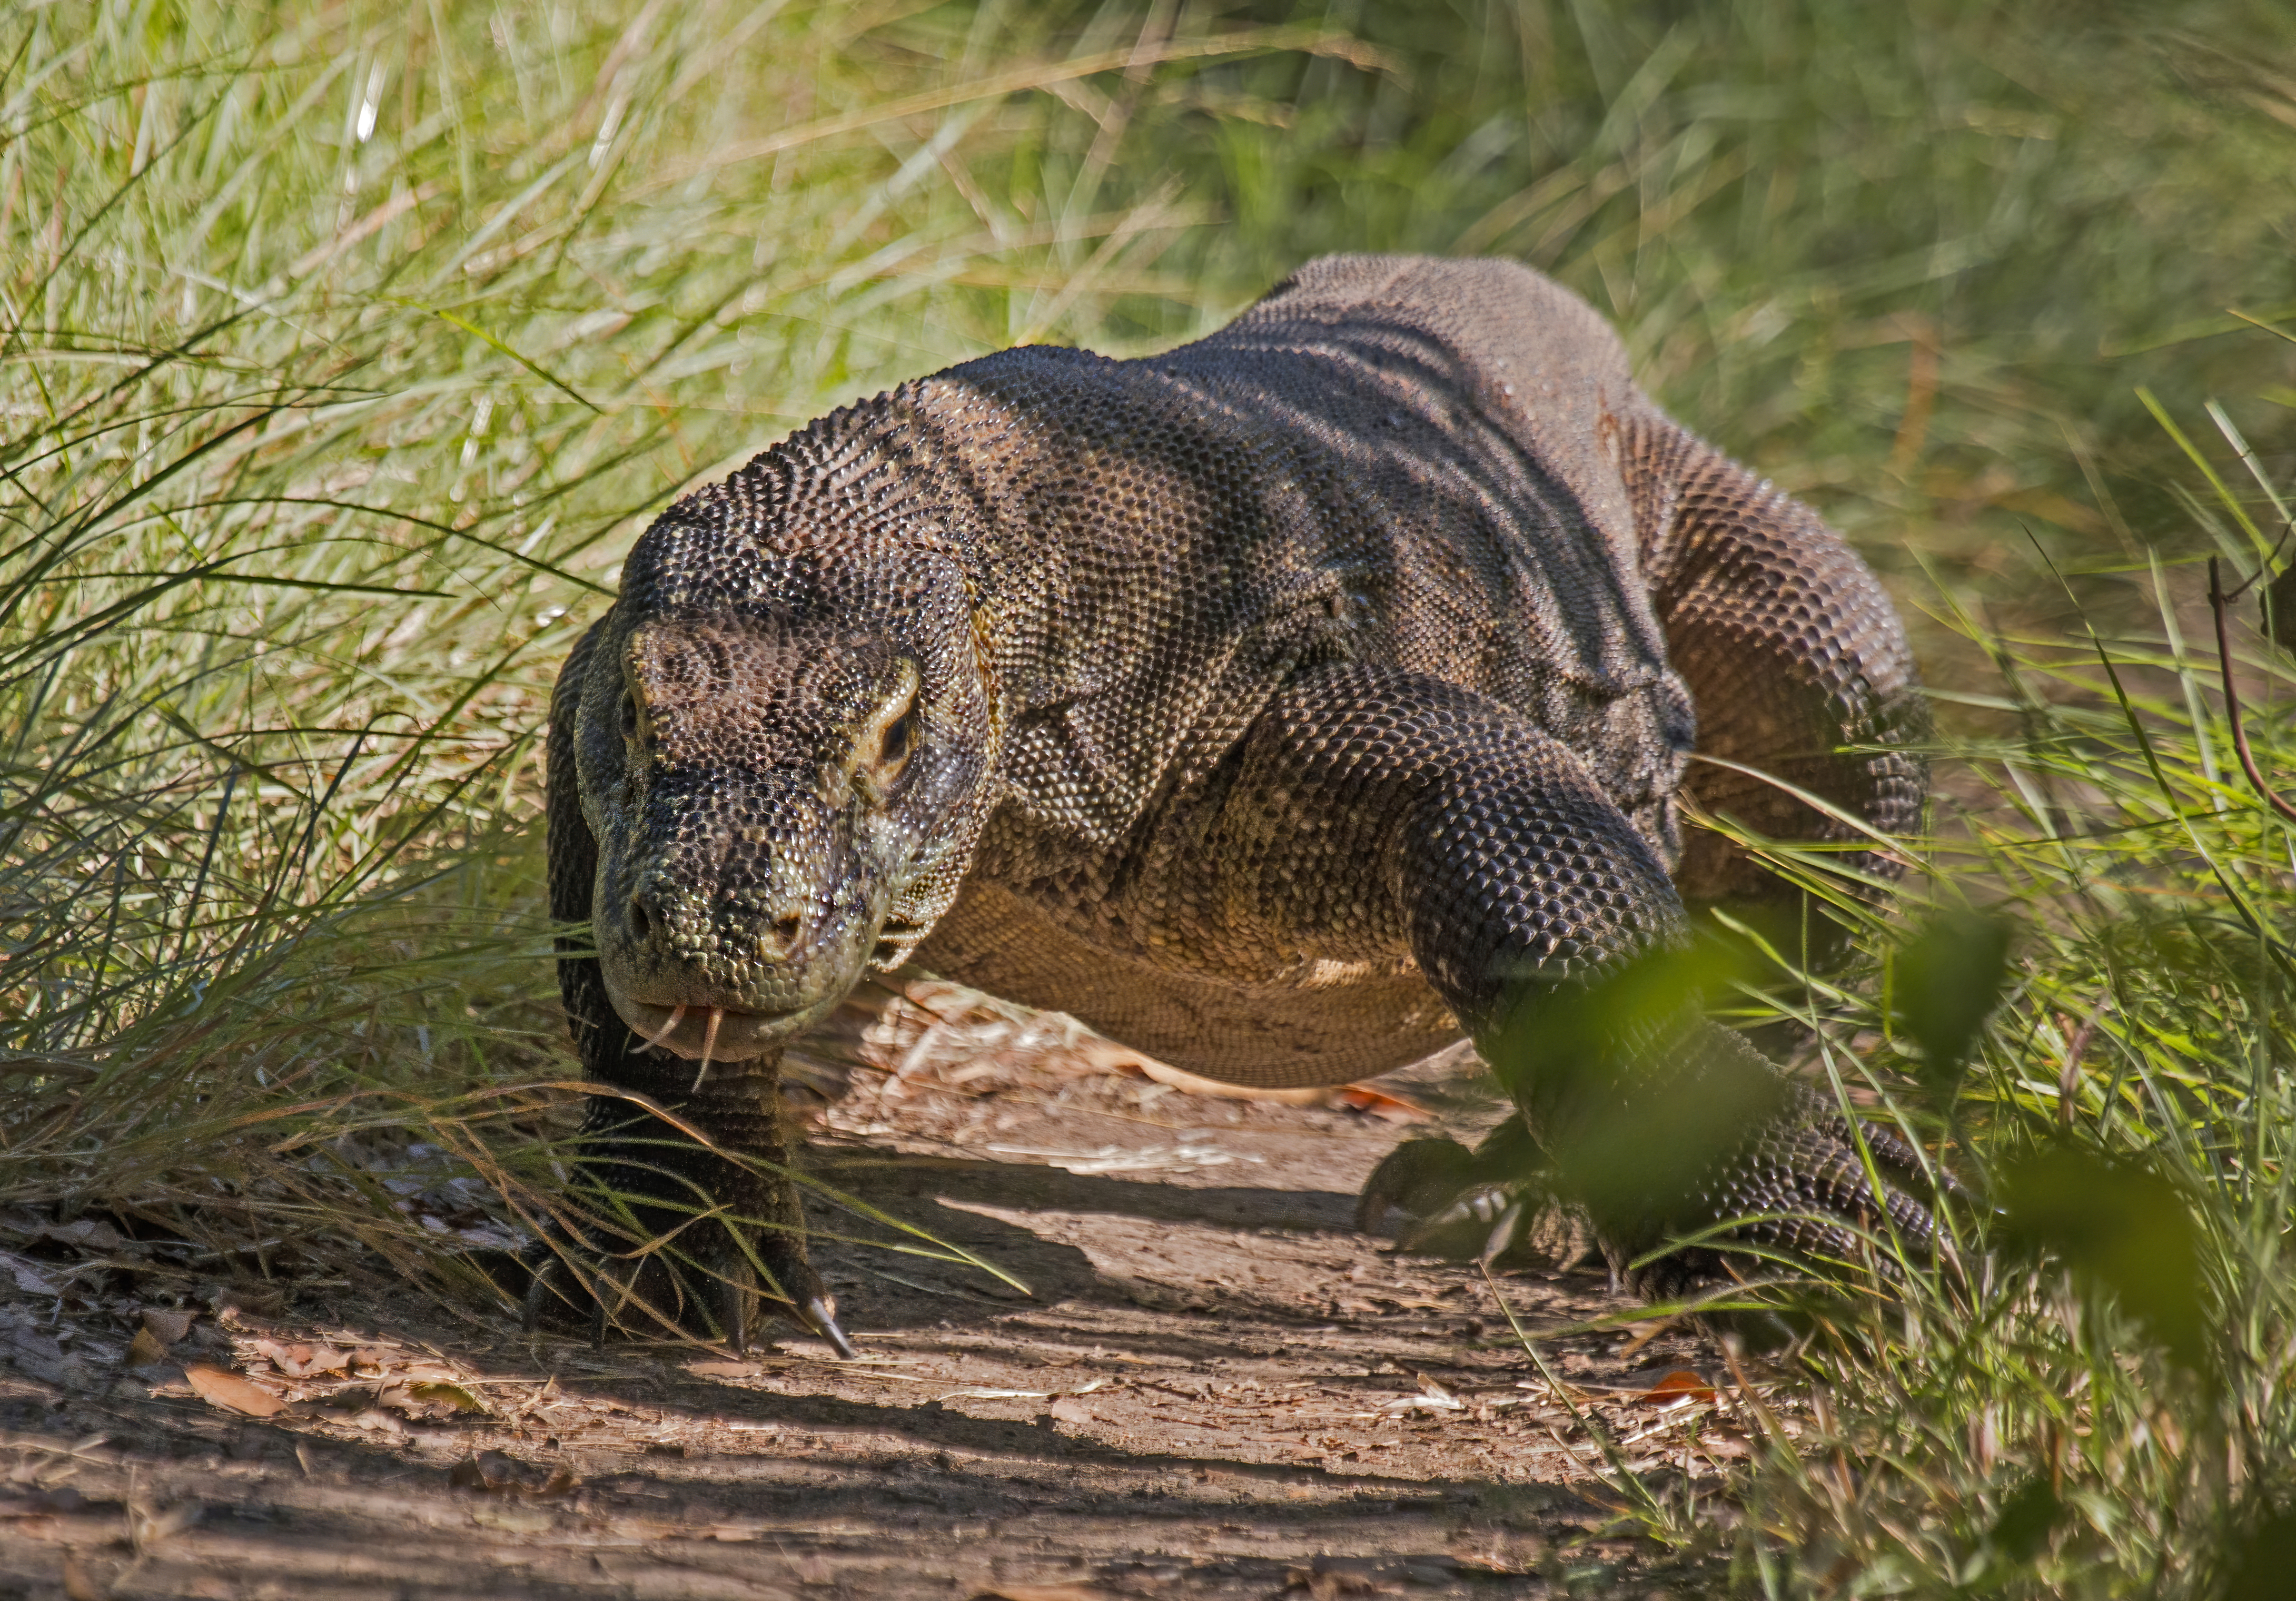 Are Komodo dragons aerobic or anaerobic?